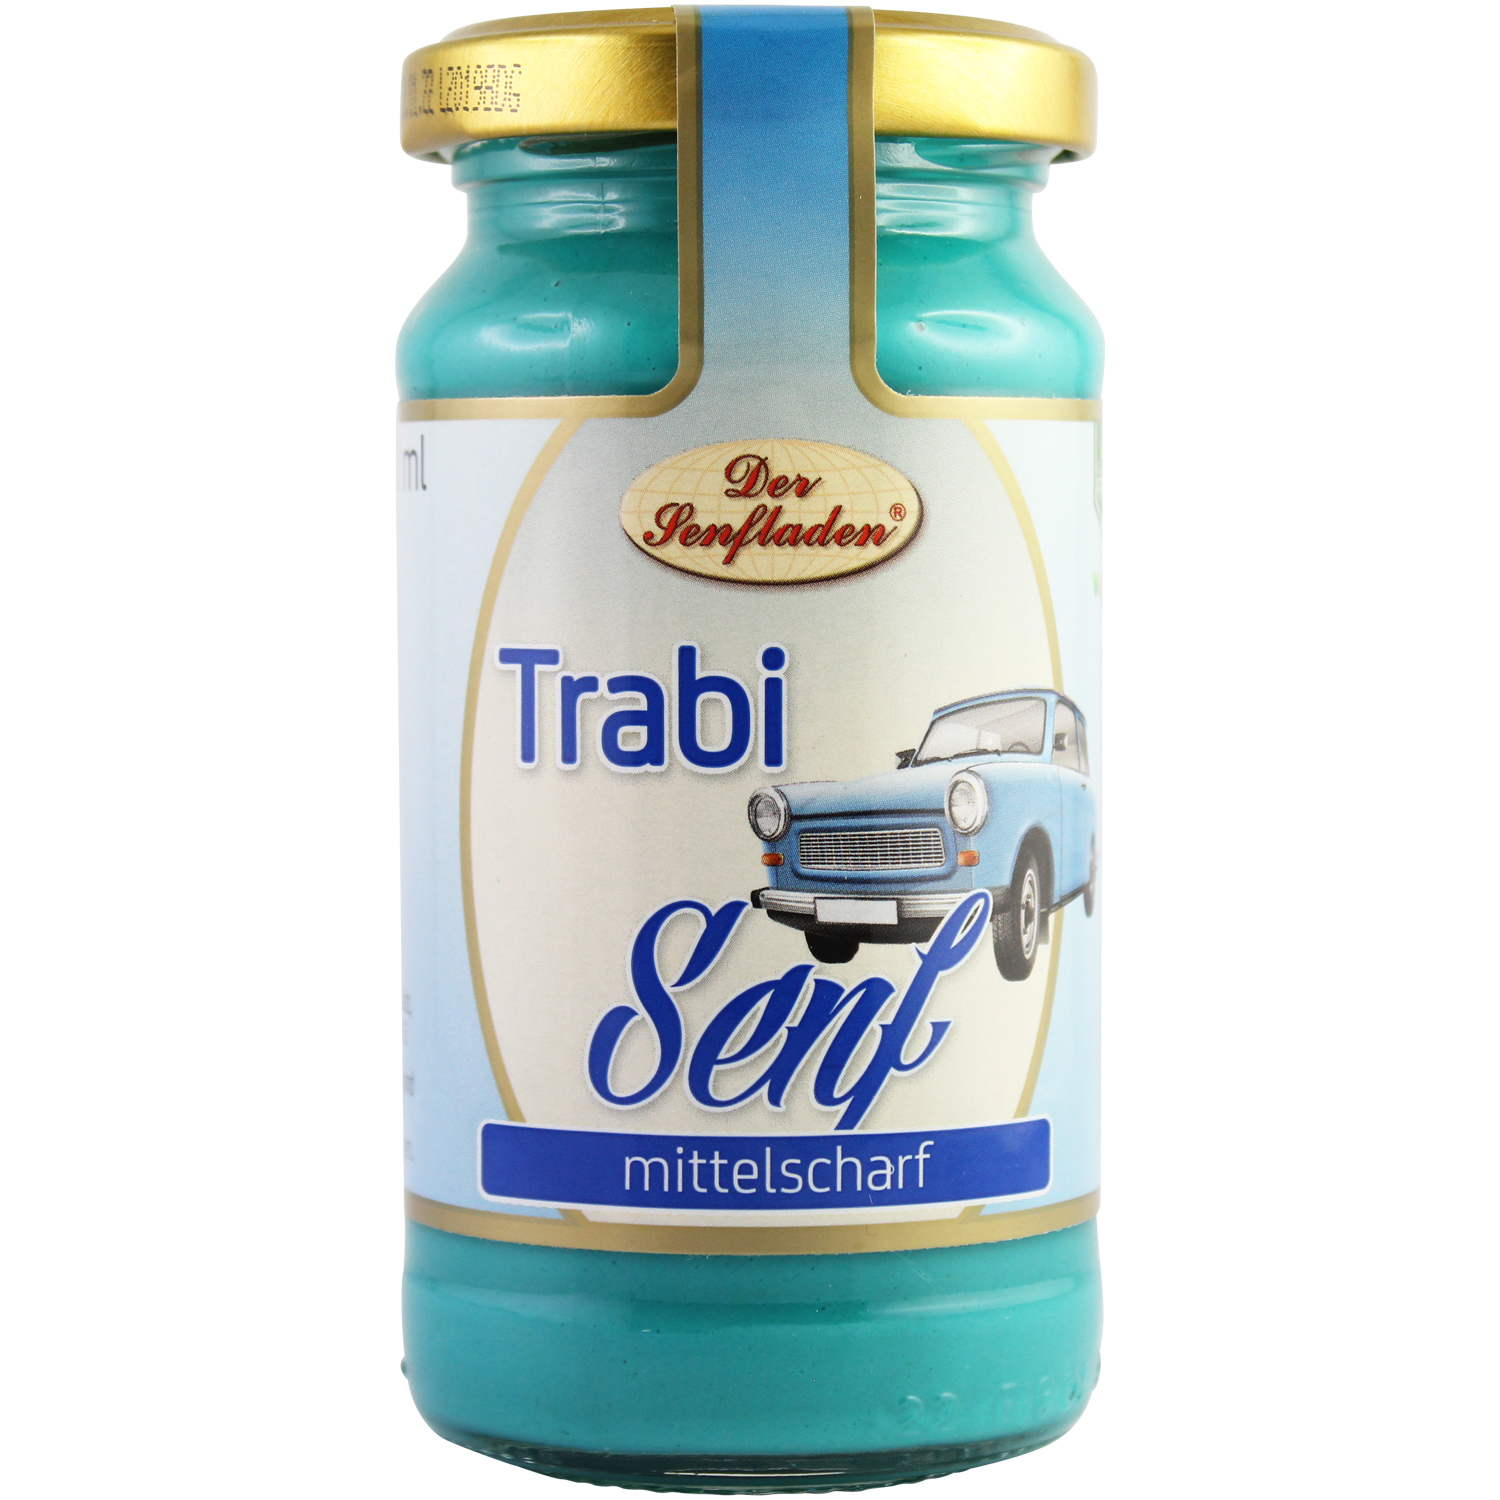 Trabi Senf